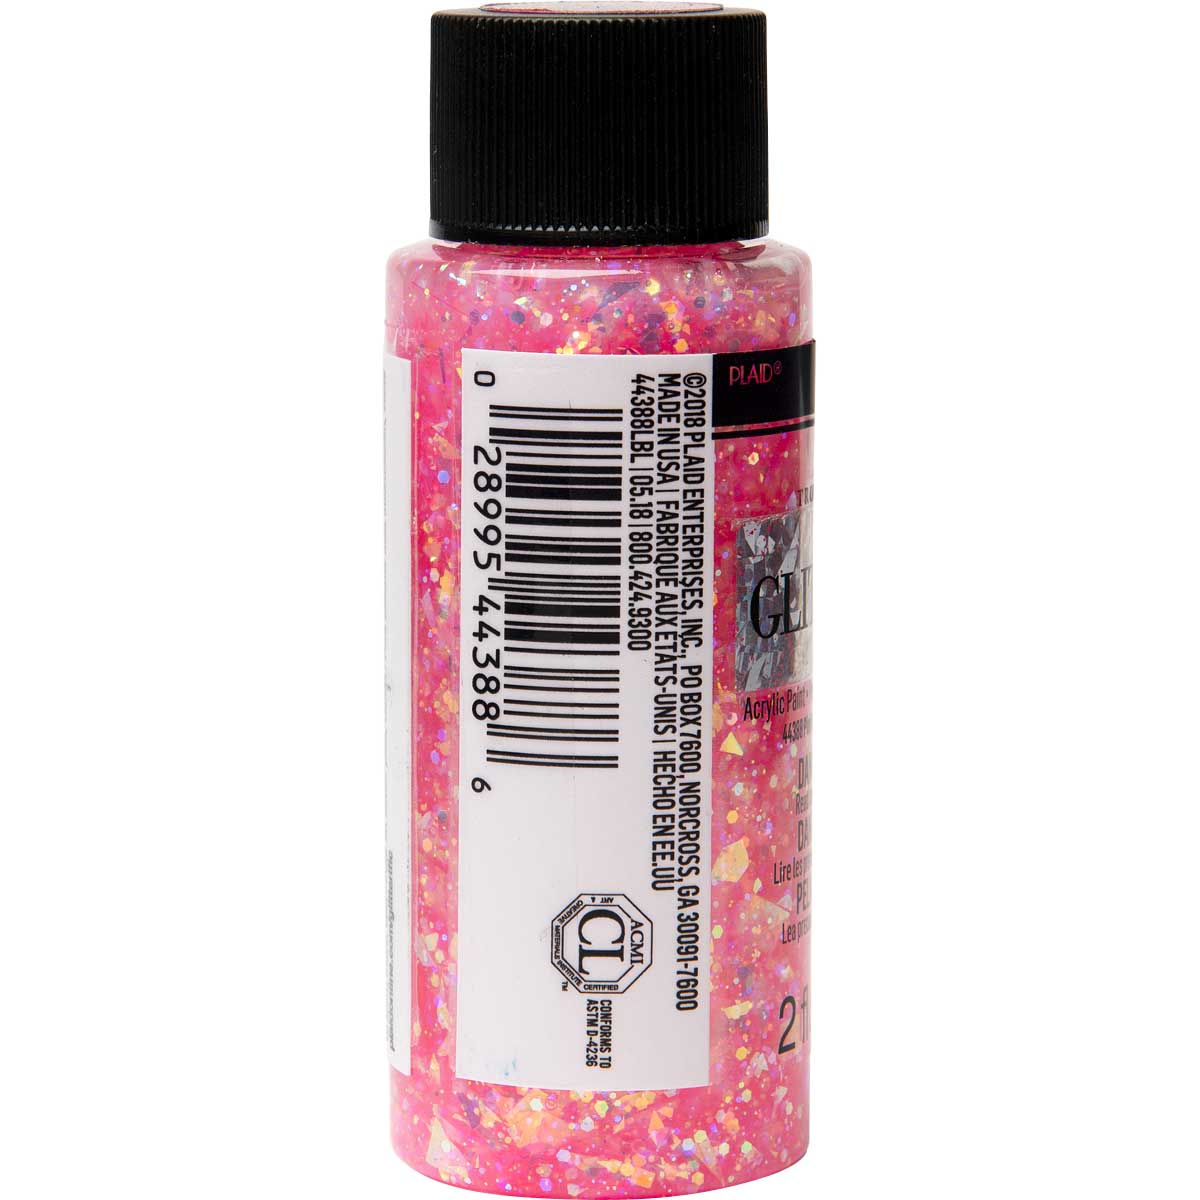 FolkArt ® Glitterific™ Acrylic Paint - Neon Pink, 2 oz. - 44388